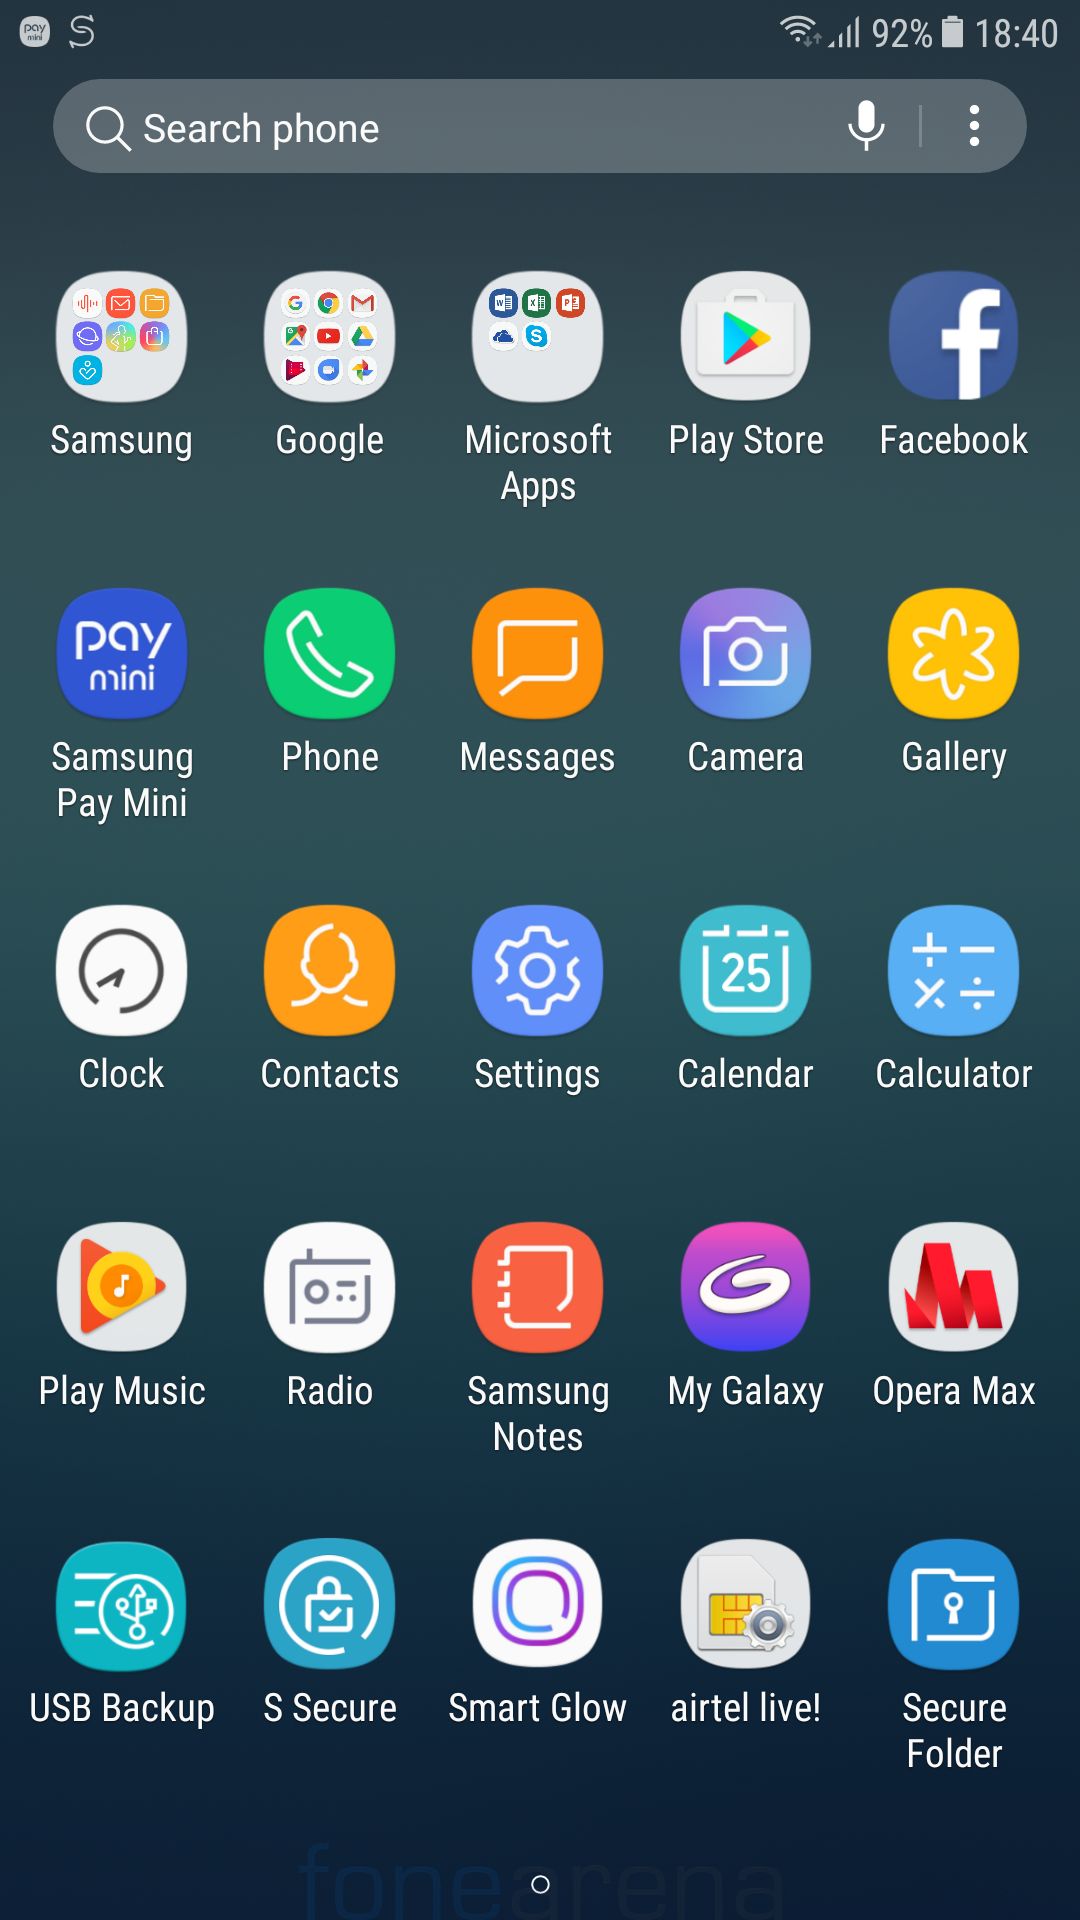 Samsung Galaxy J7 Max Review
